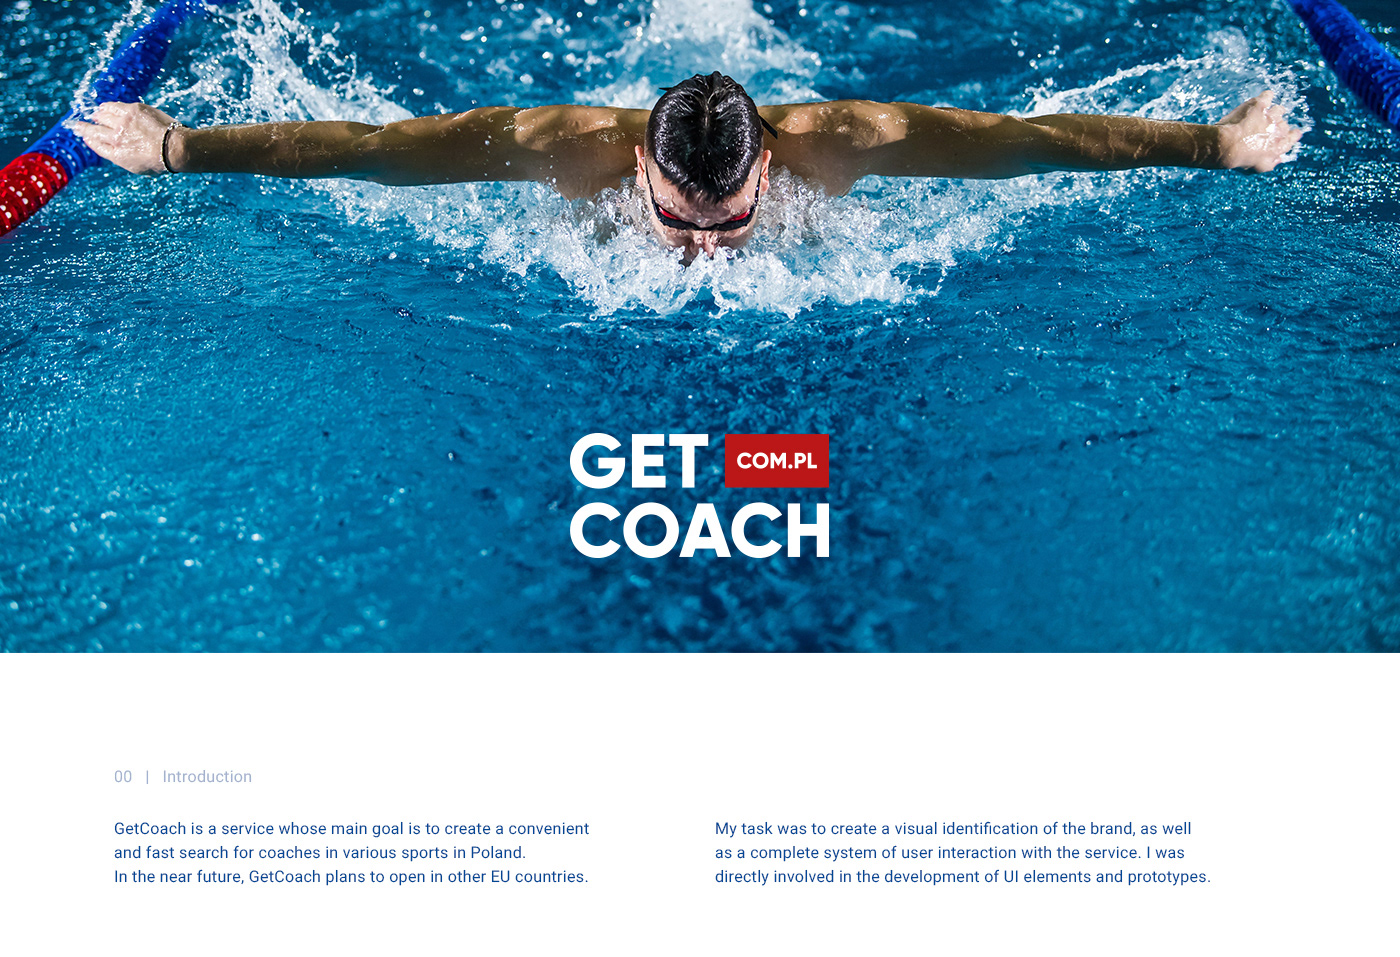 Get Coach online service coach search sport sport trainer sport coach Coach trainer branding 